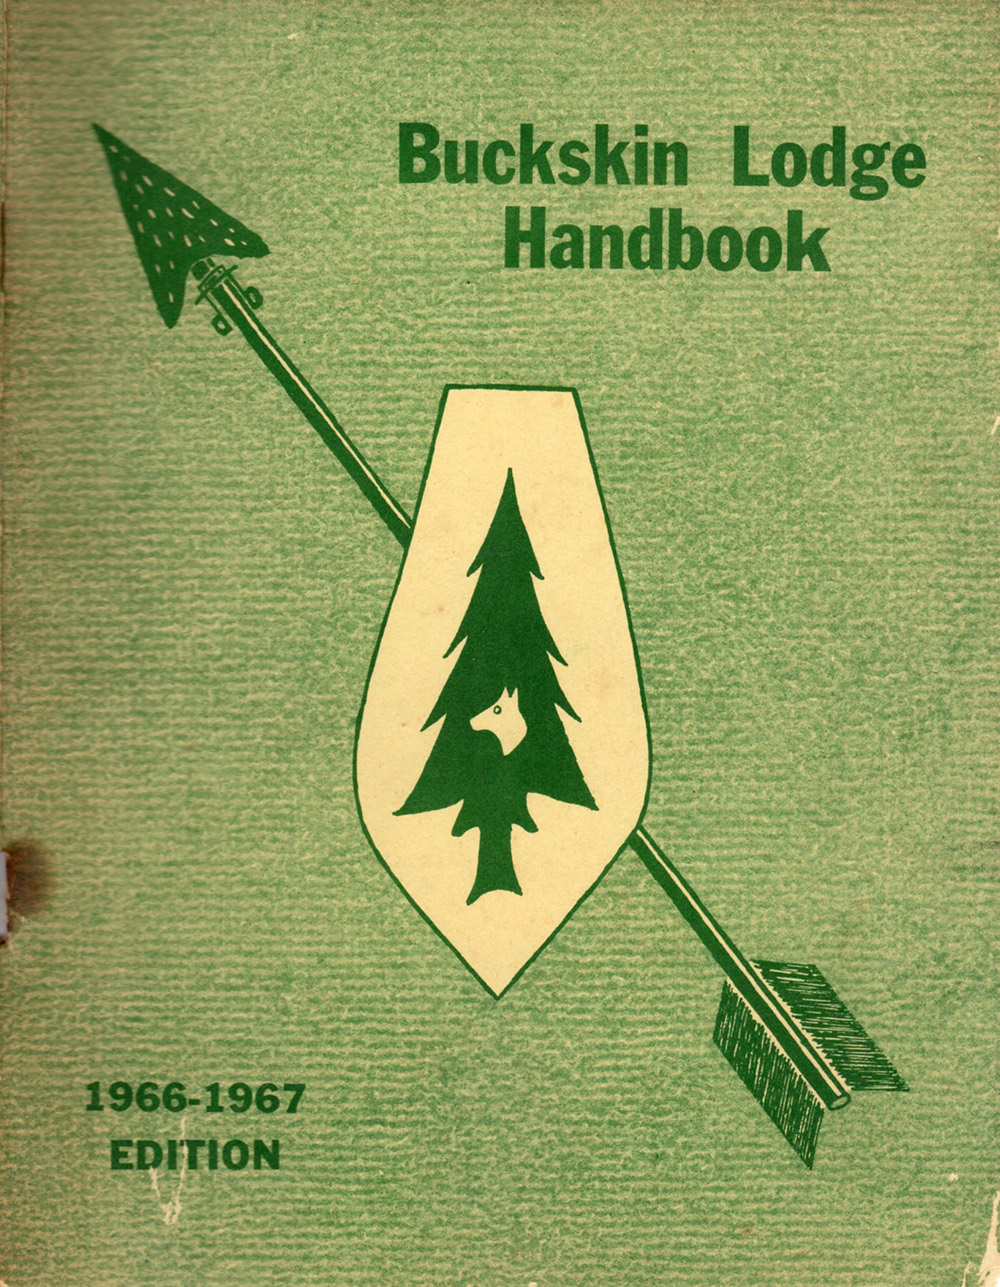 1966-1967 Handbook